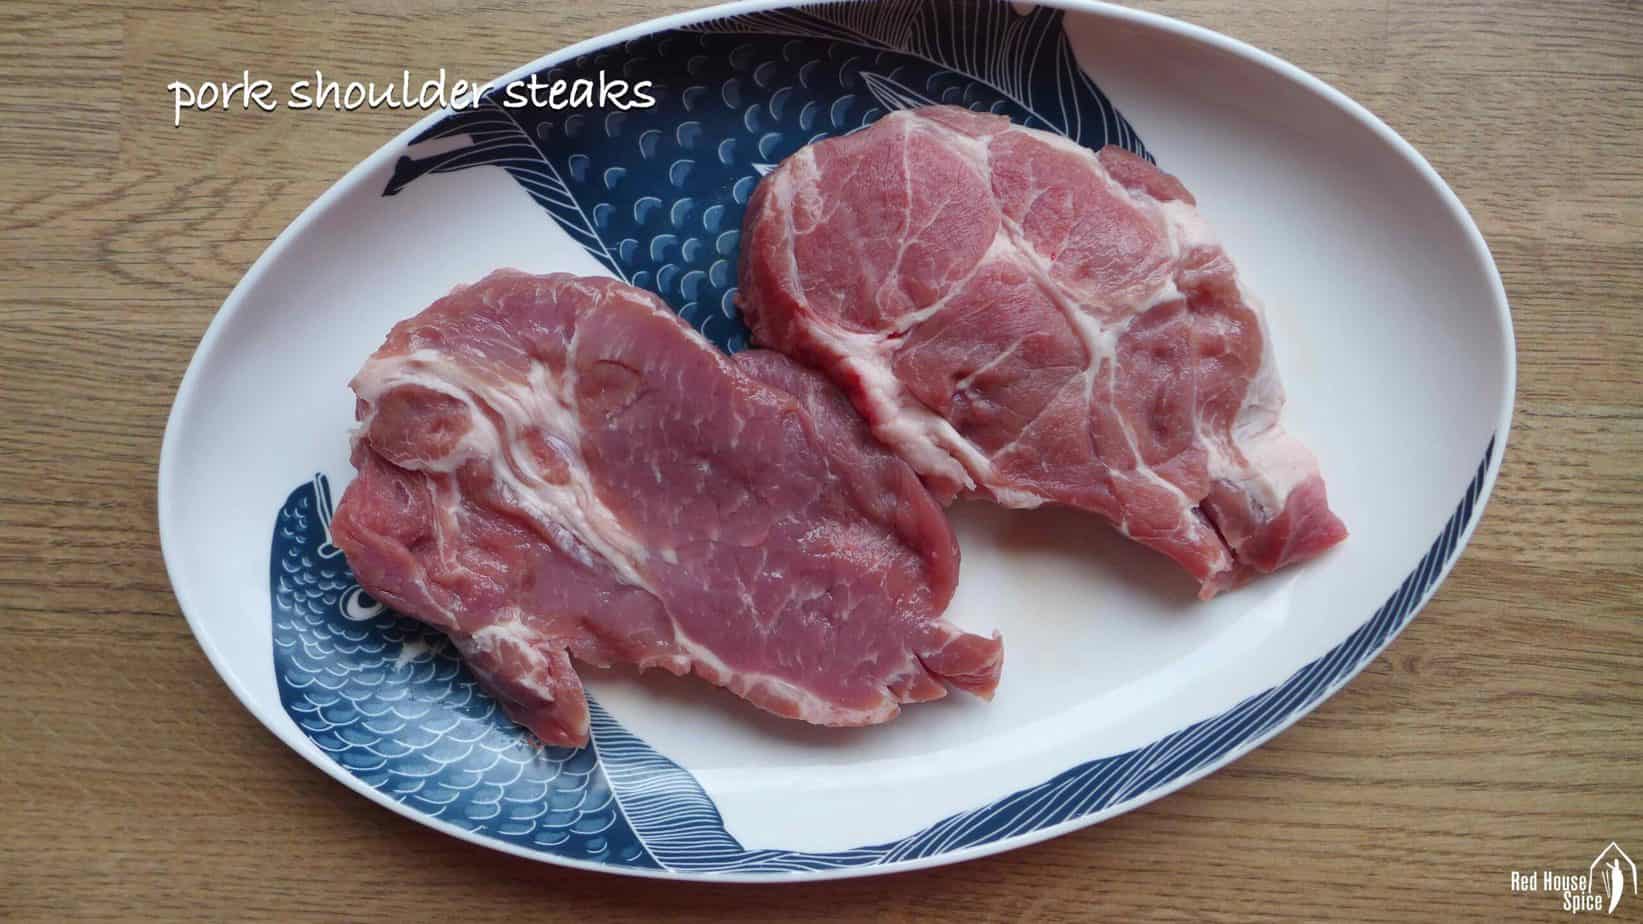 Two pieces of pork shoulder steak